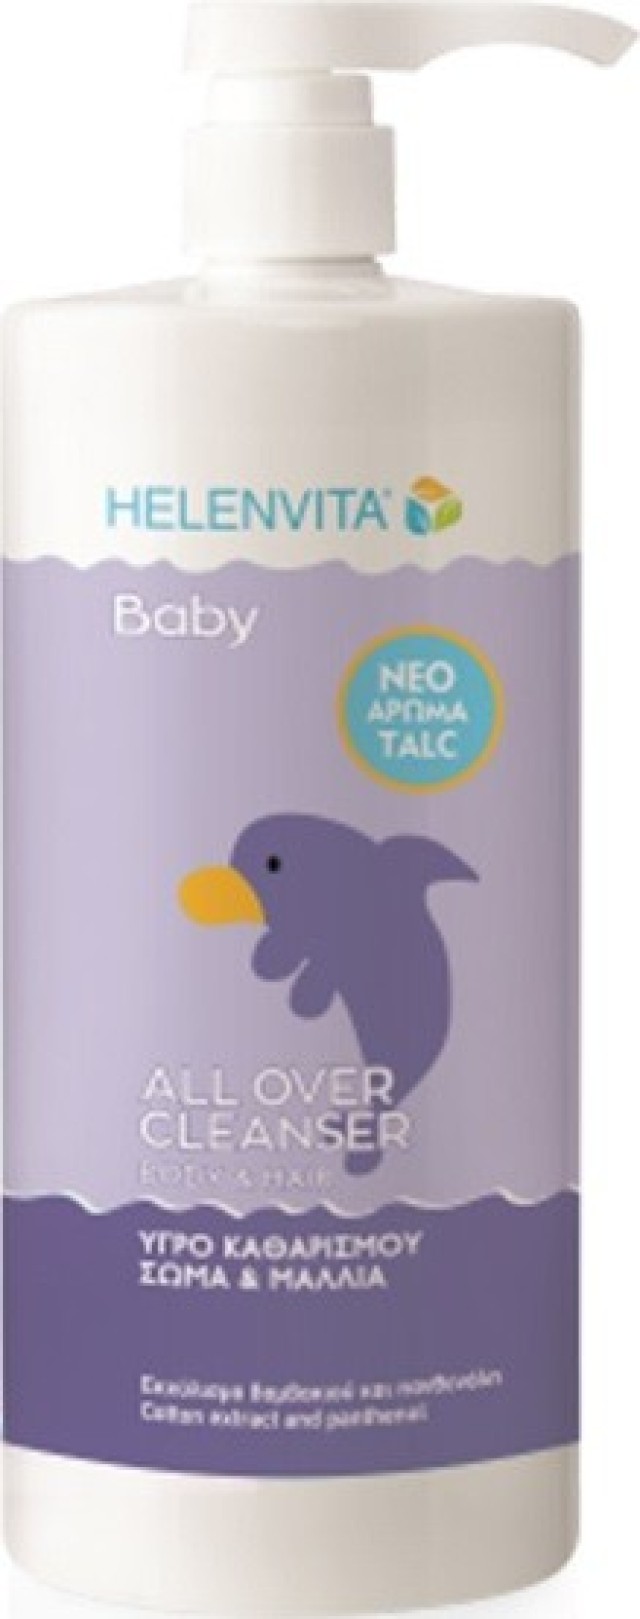 Helenvita Baby All Over Cleanser Βρεφικό Υγρό Καθαρισμού Για Σώμα & Μαλλιά με Άρωμα Talc 1lt